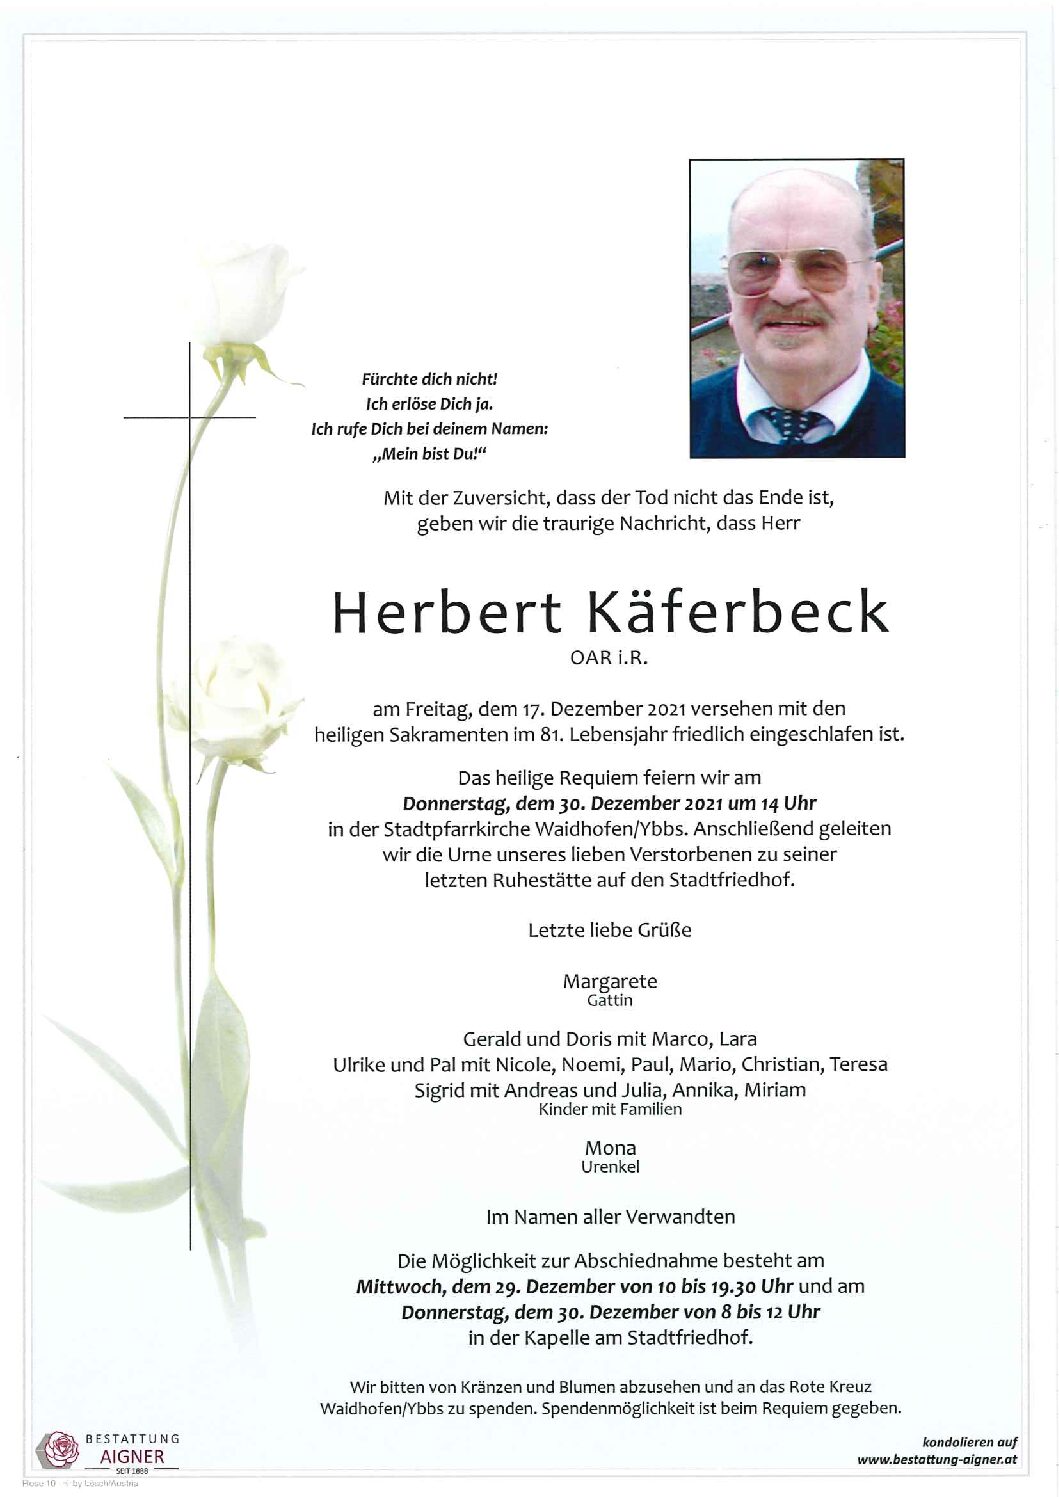 Herbert Käferbeck